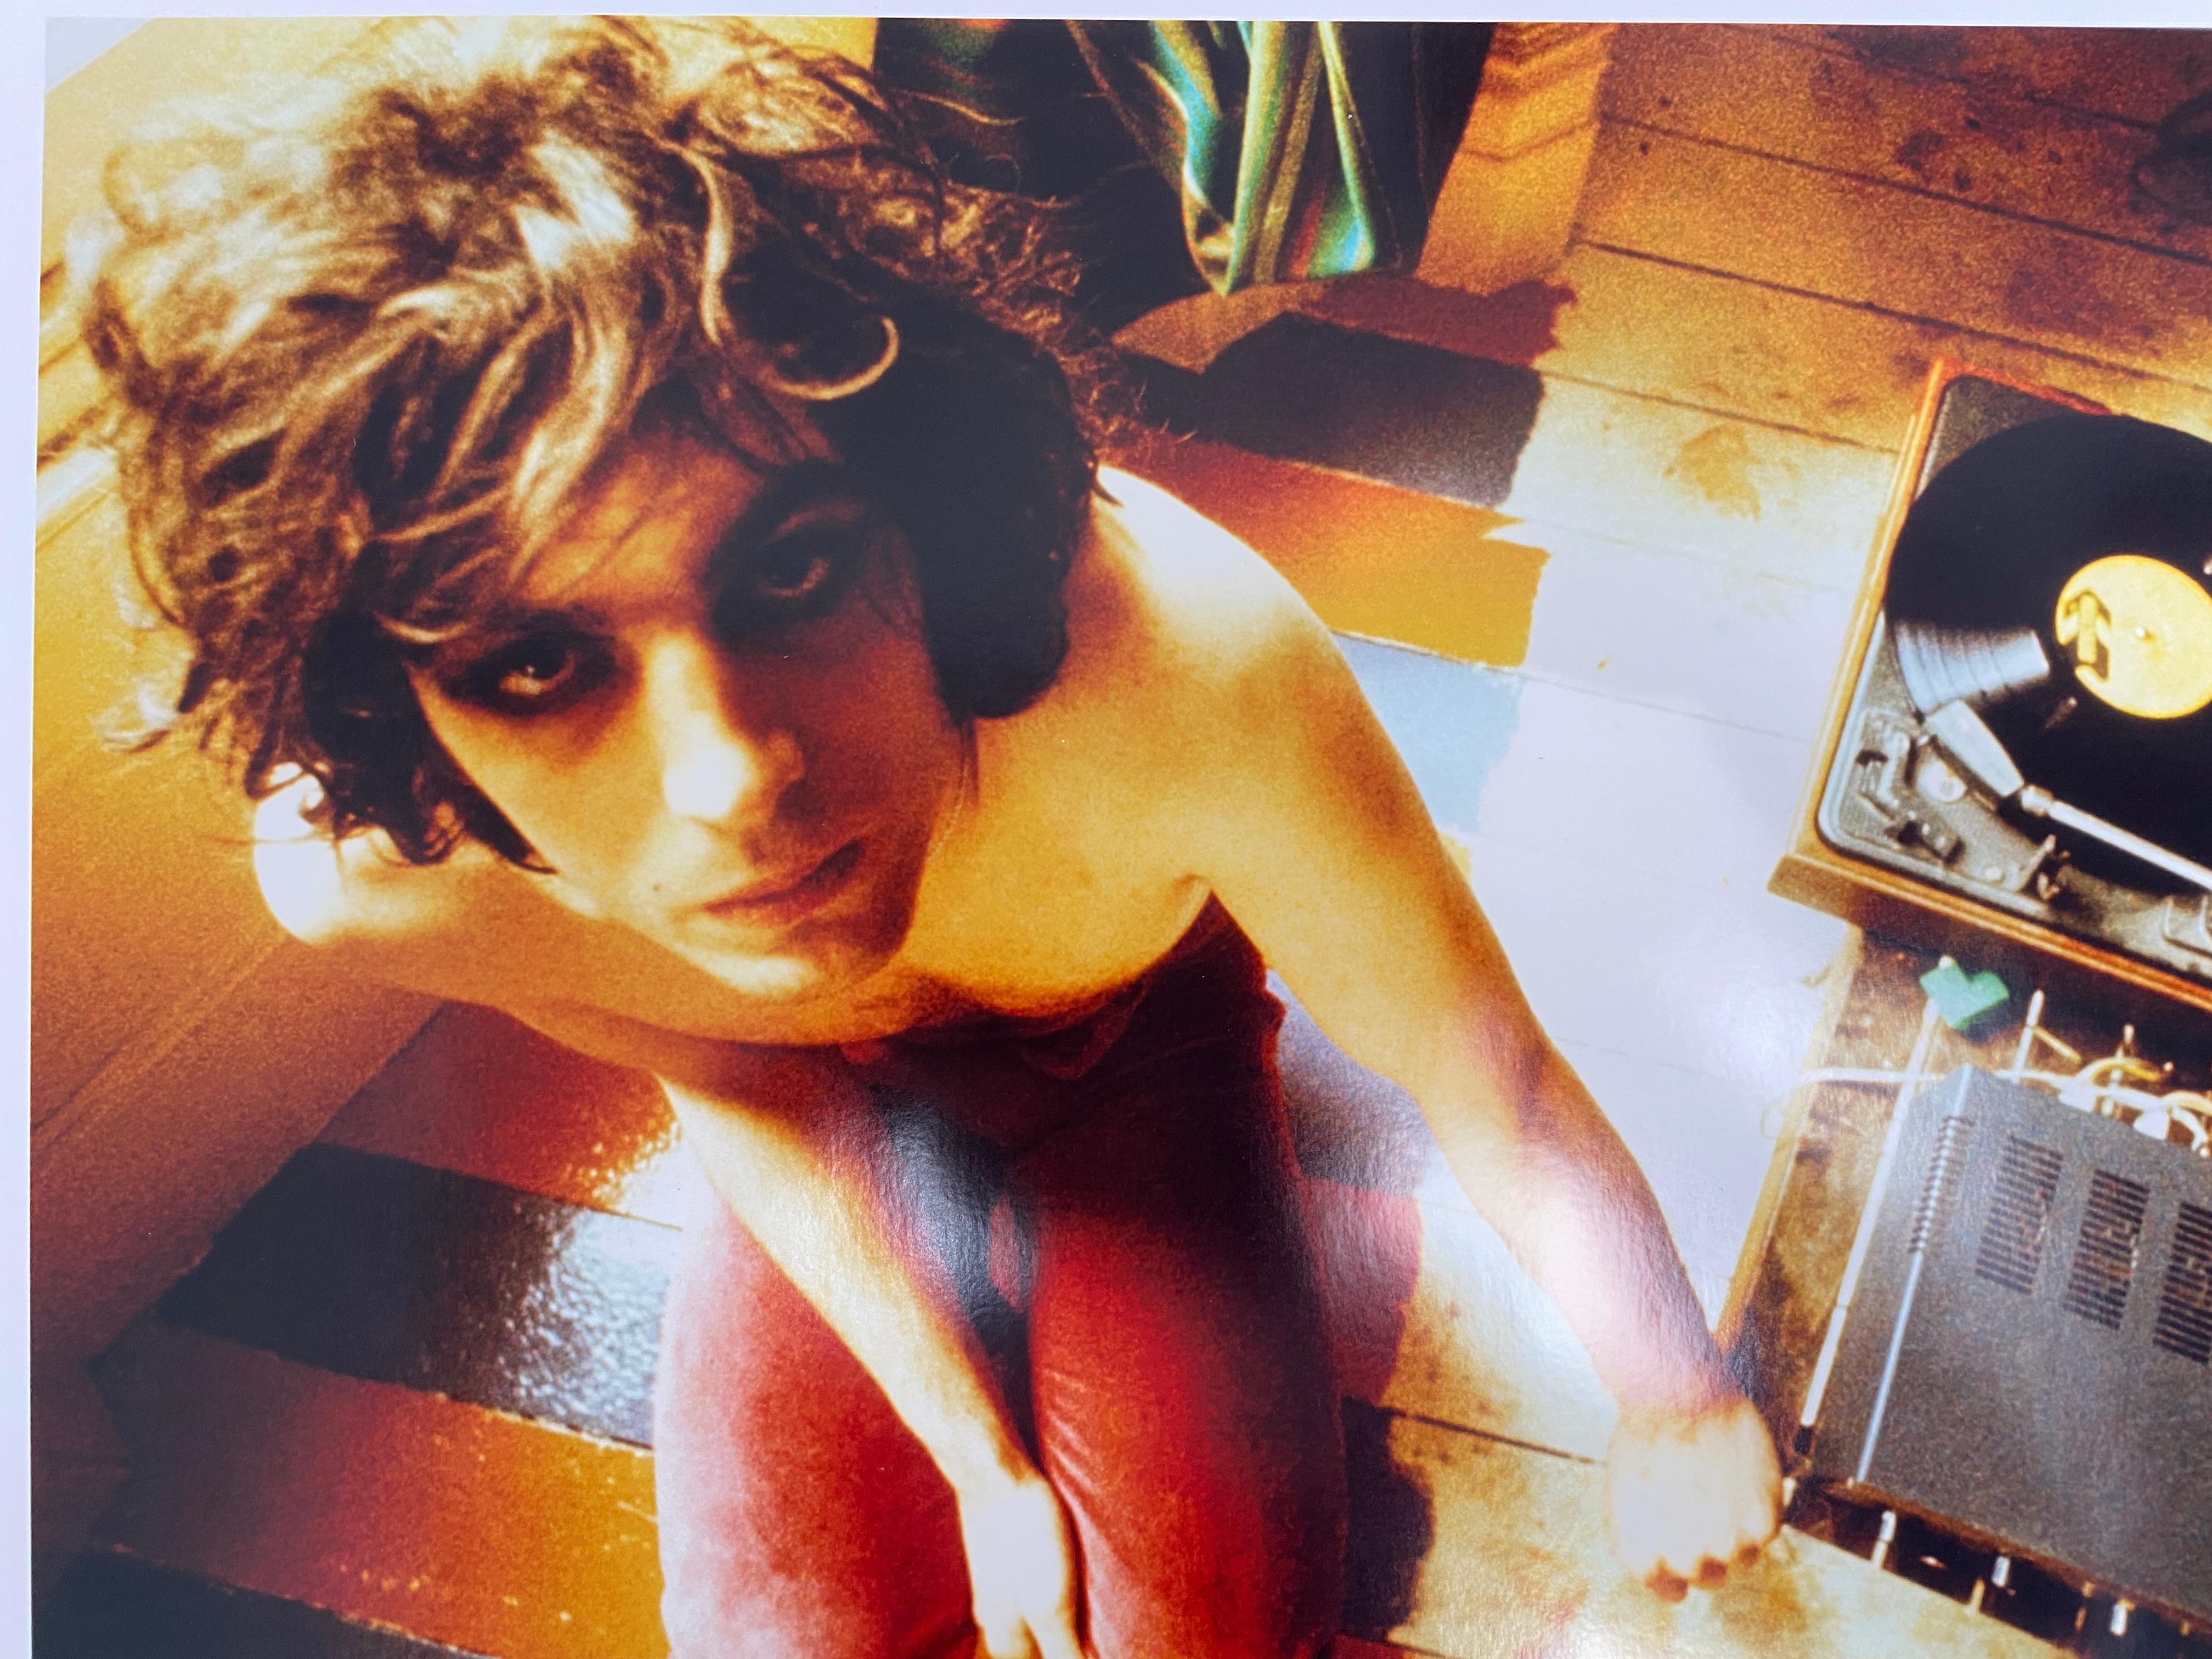 Mick Rock
Syd Barrett, 1969
Archival inkjet print
16 x 20 inches  (40.6 x 50.8 cm)
Edition 24/90